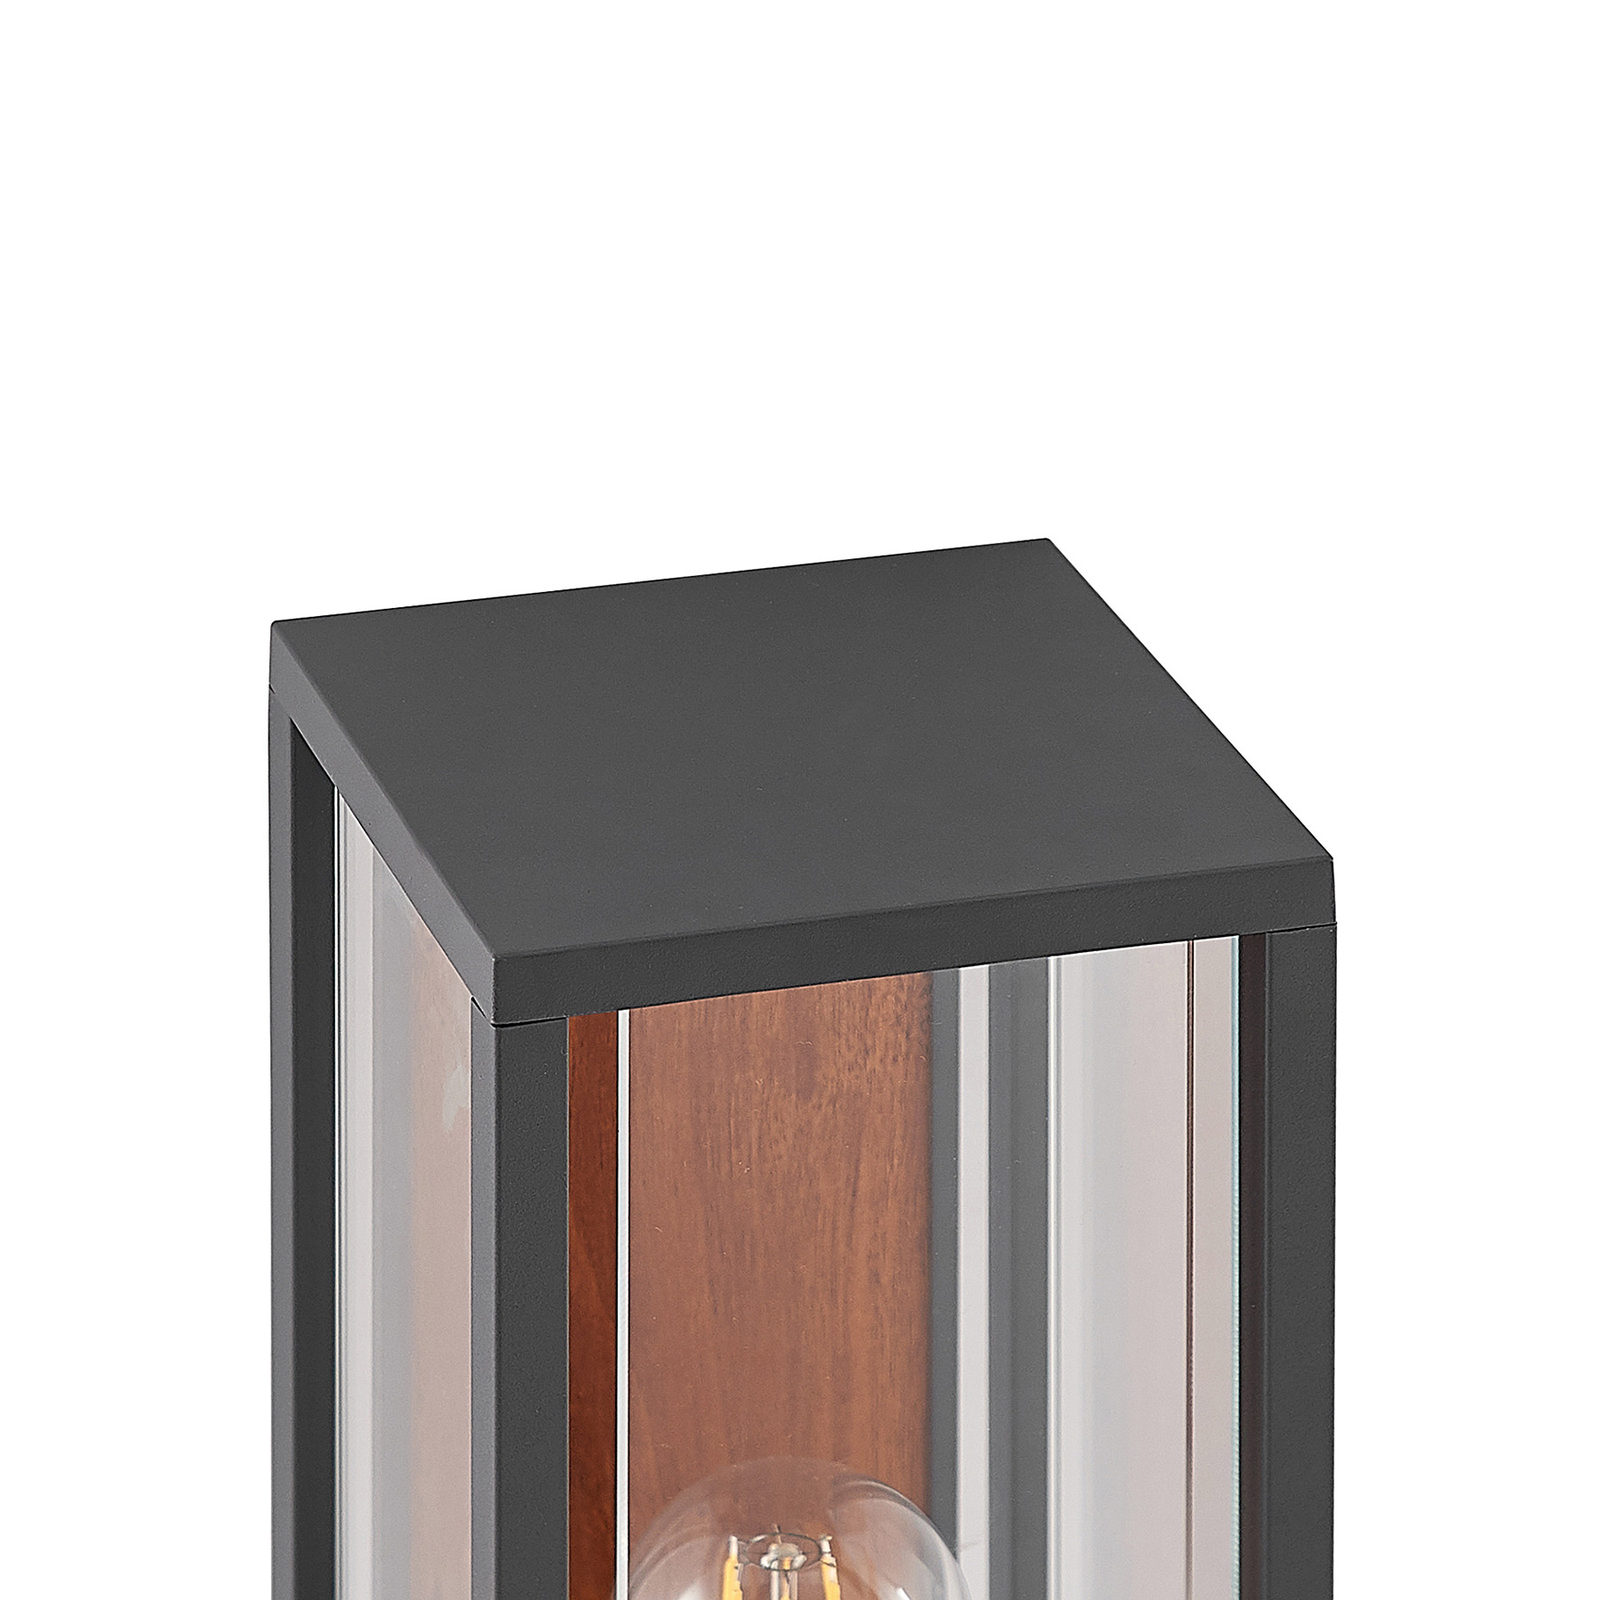 Lucande Elwin soklové svetlo hranaté hliník, 35 cm